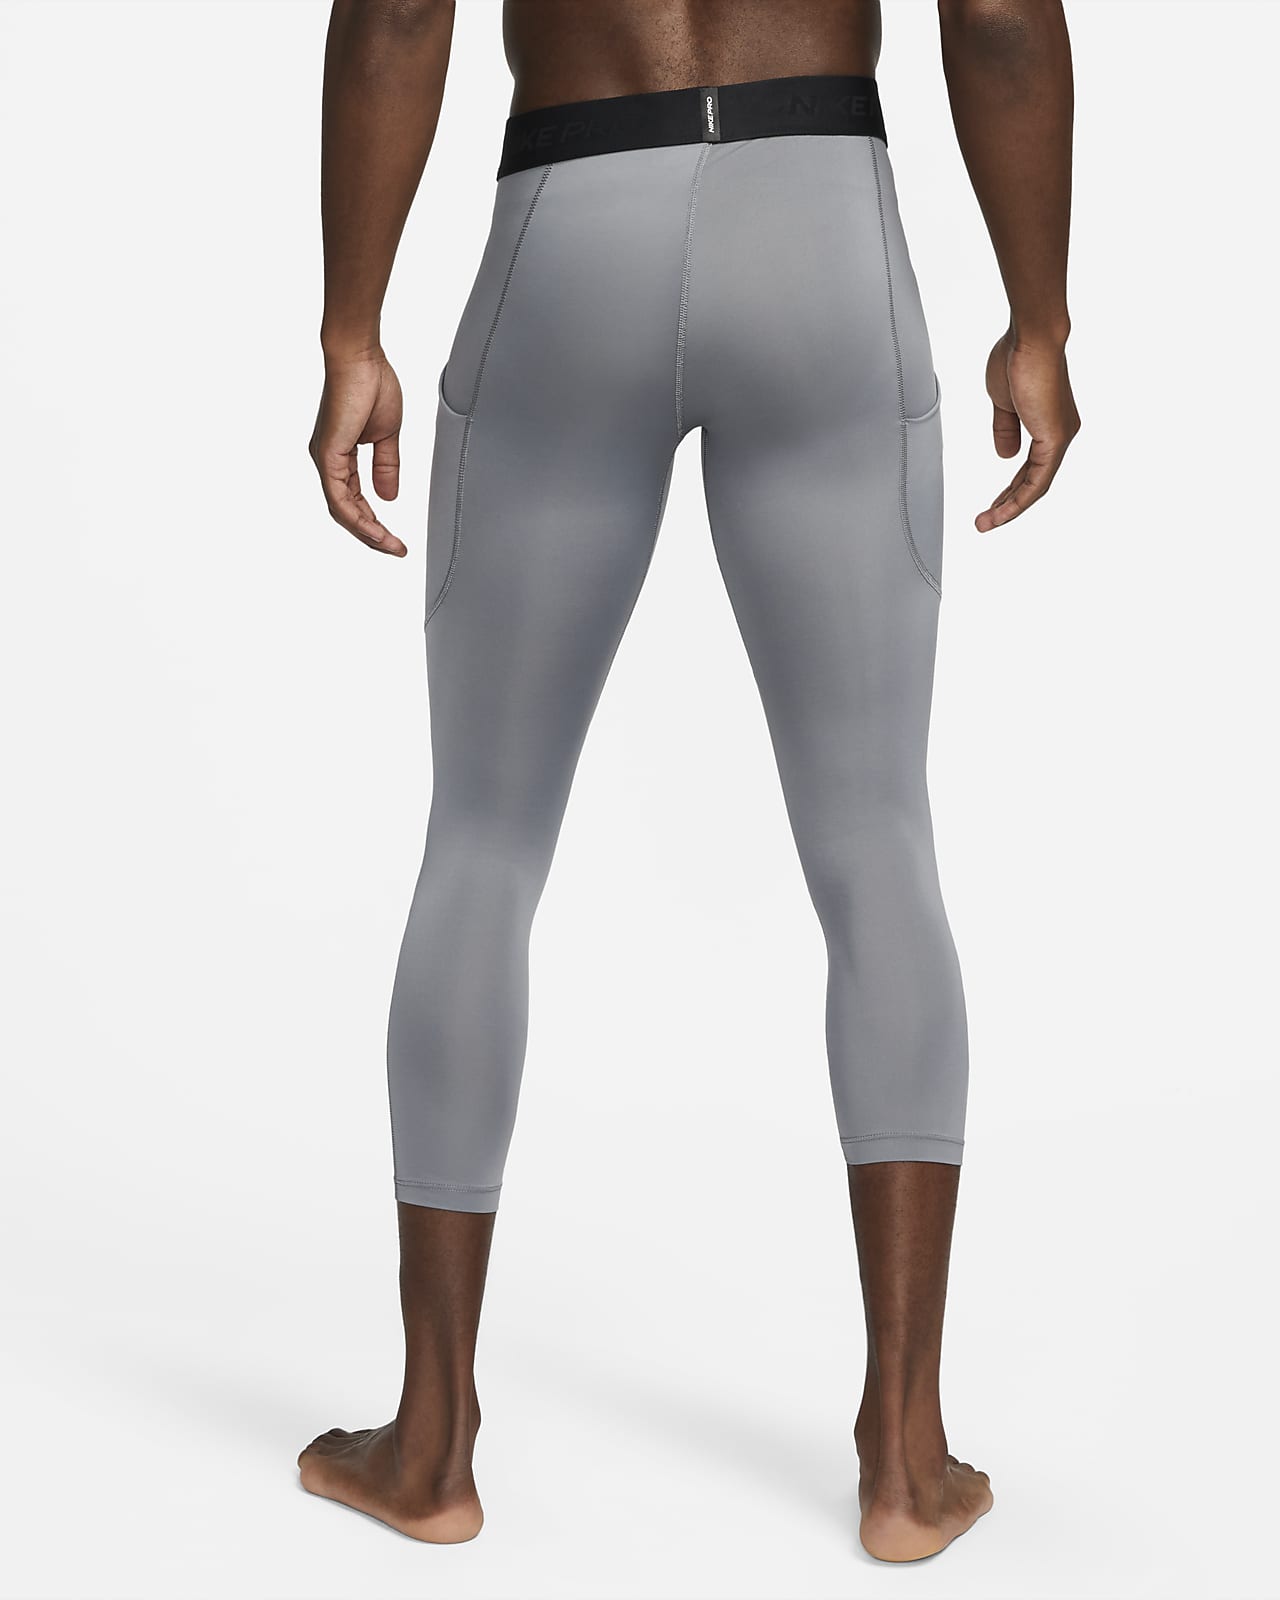 Men 3/4 One Leg Compression Base Layer Tights Athletic Basketball Pants NEW  | eBay